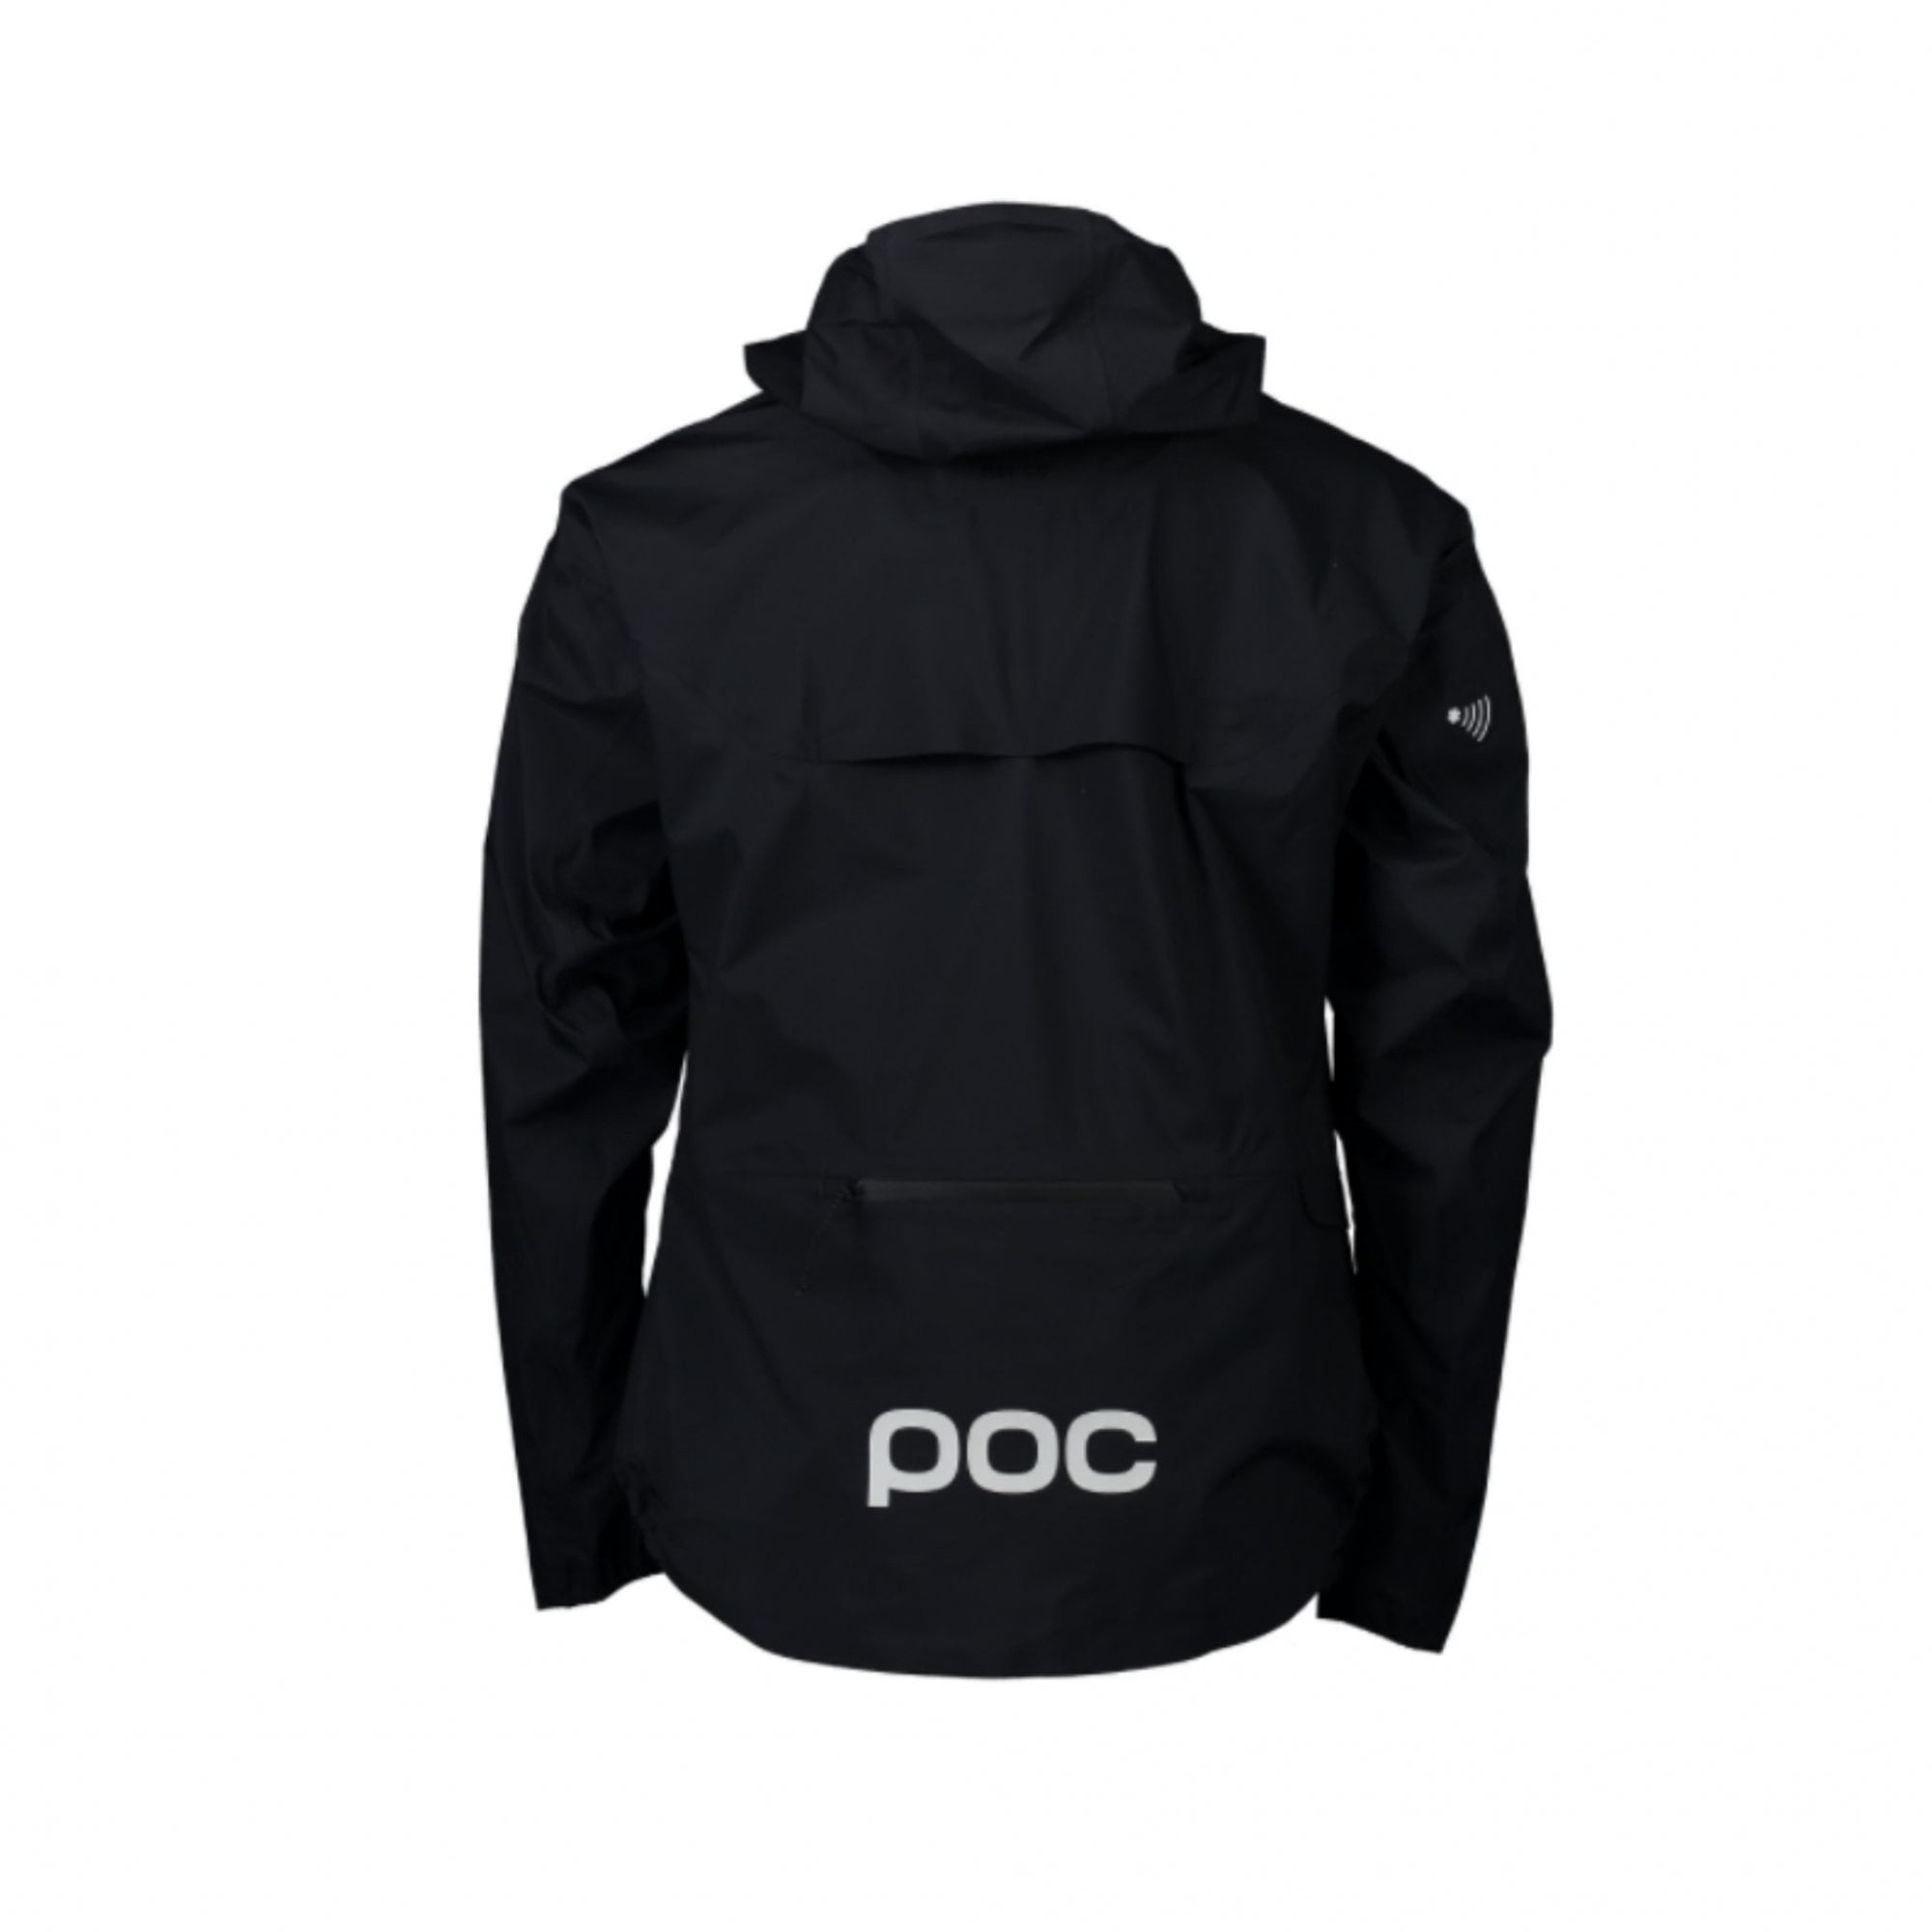 POC Signal Women's All-weather jacket